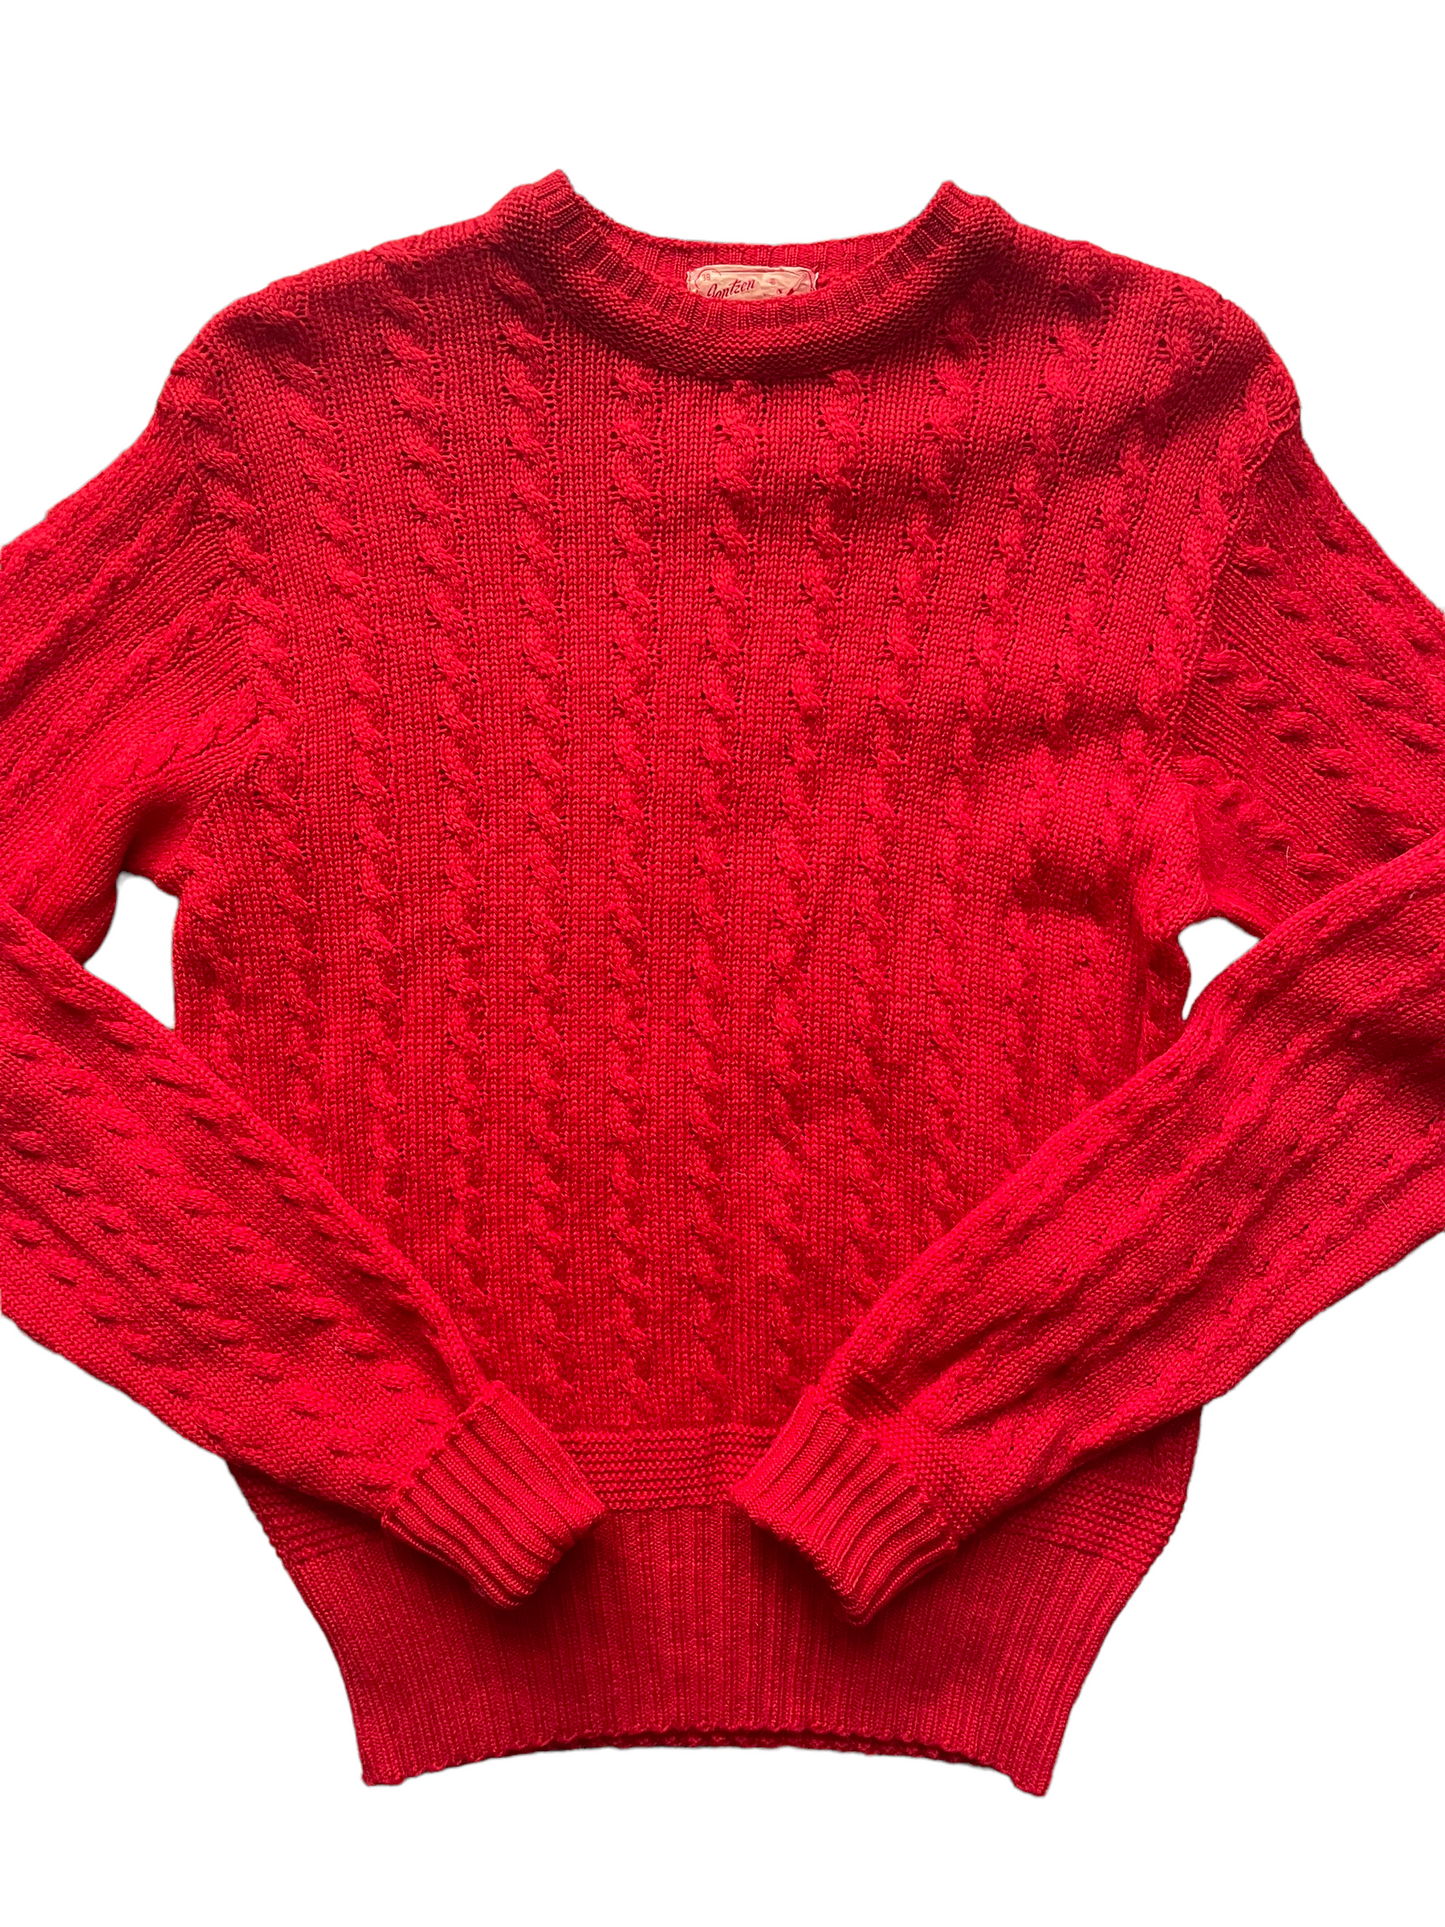 Vintage 1950s Jantzen Cable Knit Wool Sweater | Barn Owl Seattle | Seattle Vintage Sweaters Full front view.